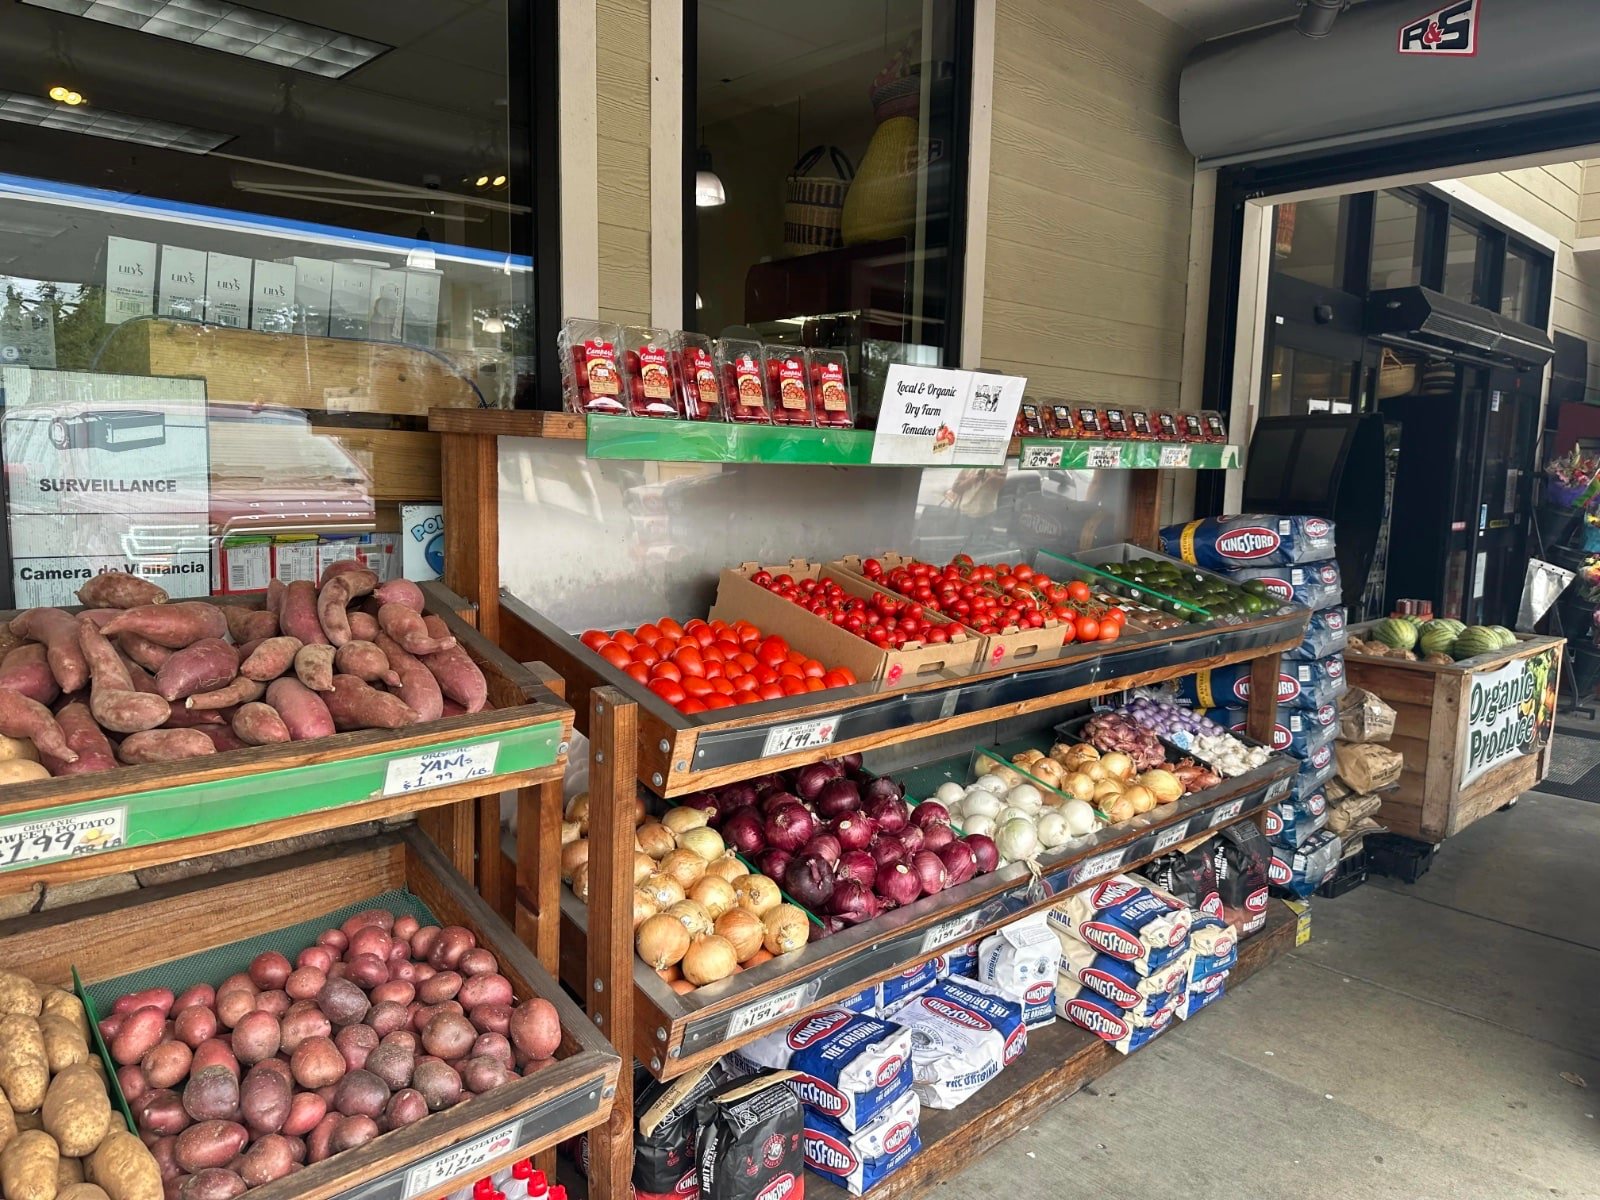 AJs Market has plenty of Fresh Organic Produce